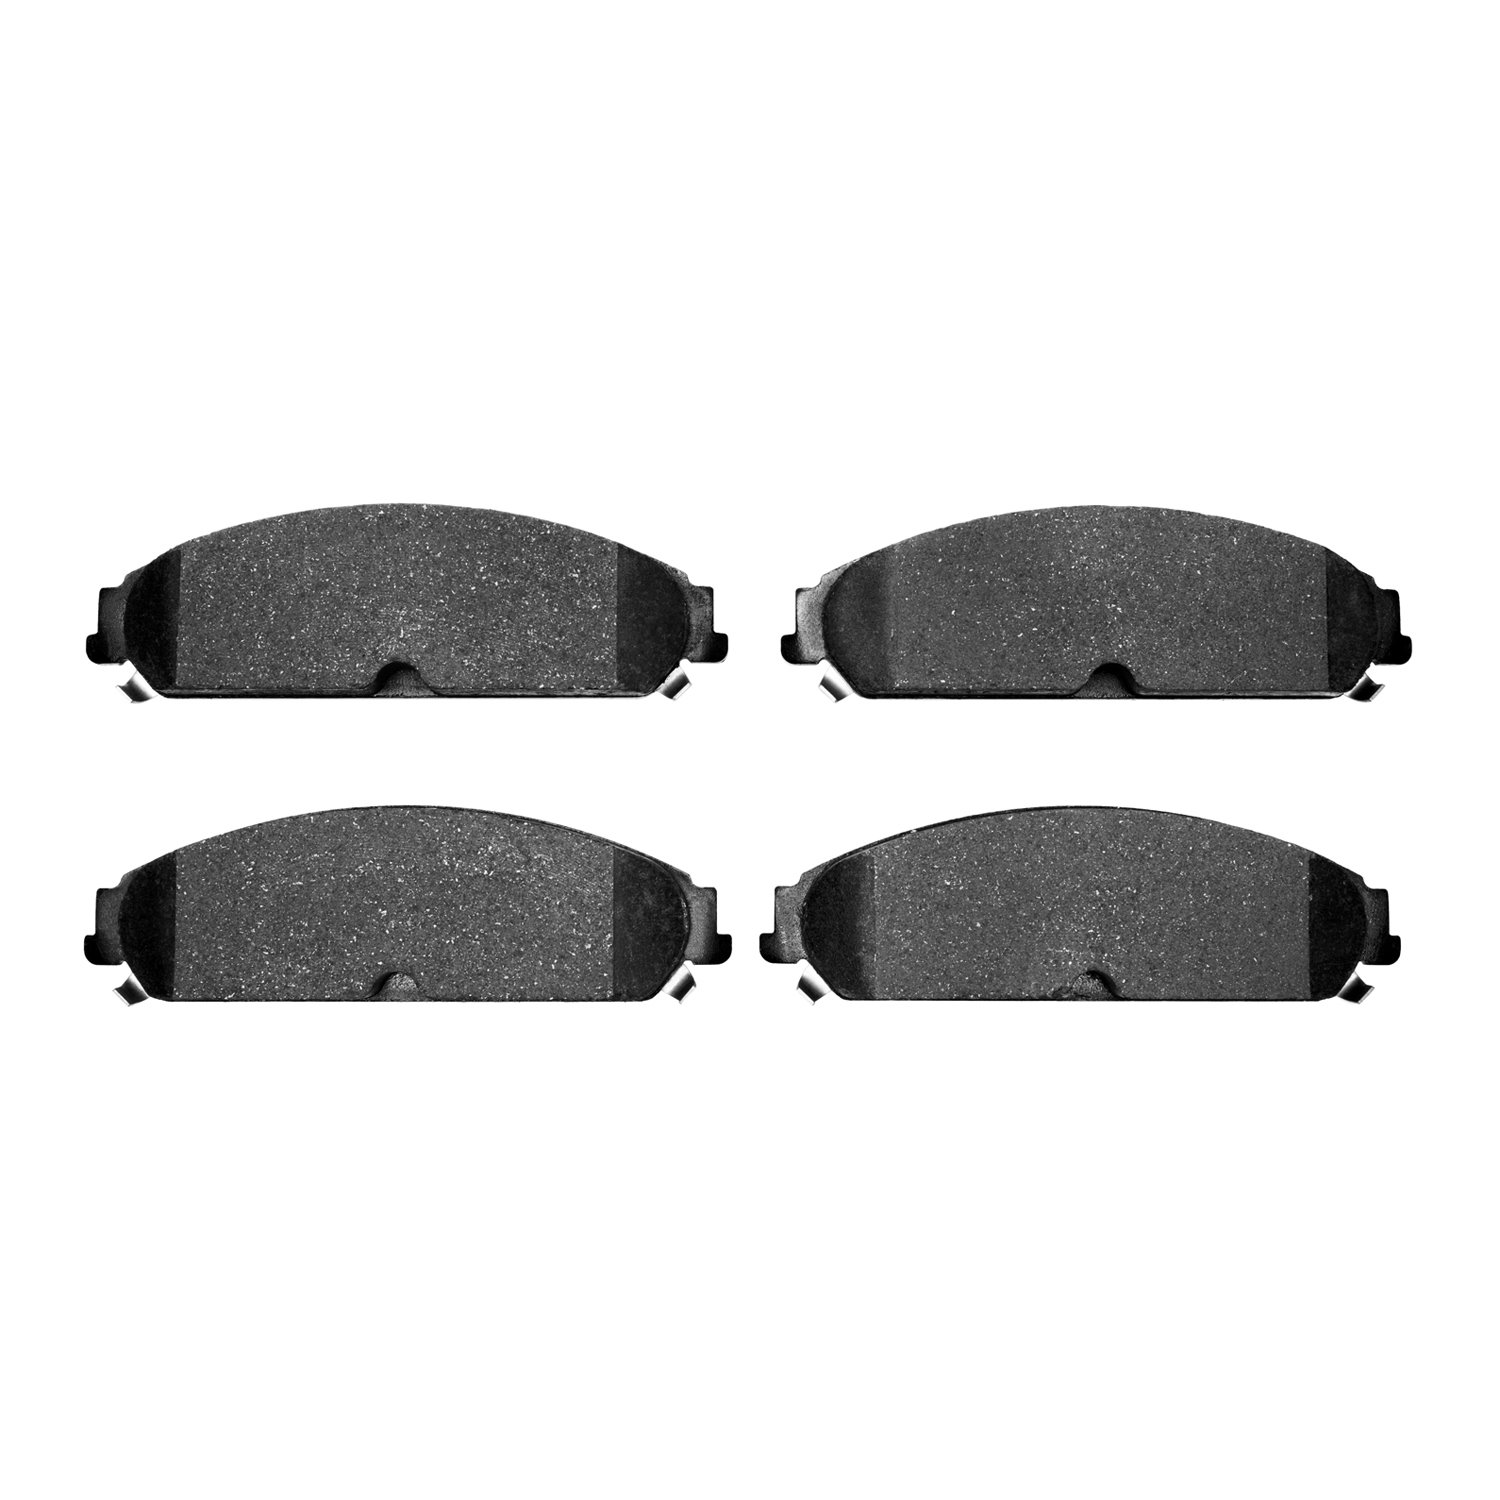 1551-1058-00 5000 Advanced Ceramic Brake Pads, Fits Select Mopar, Position: Front